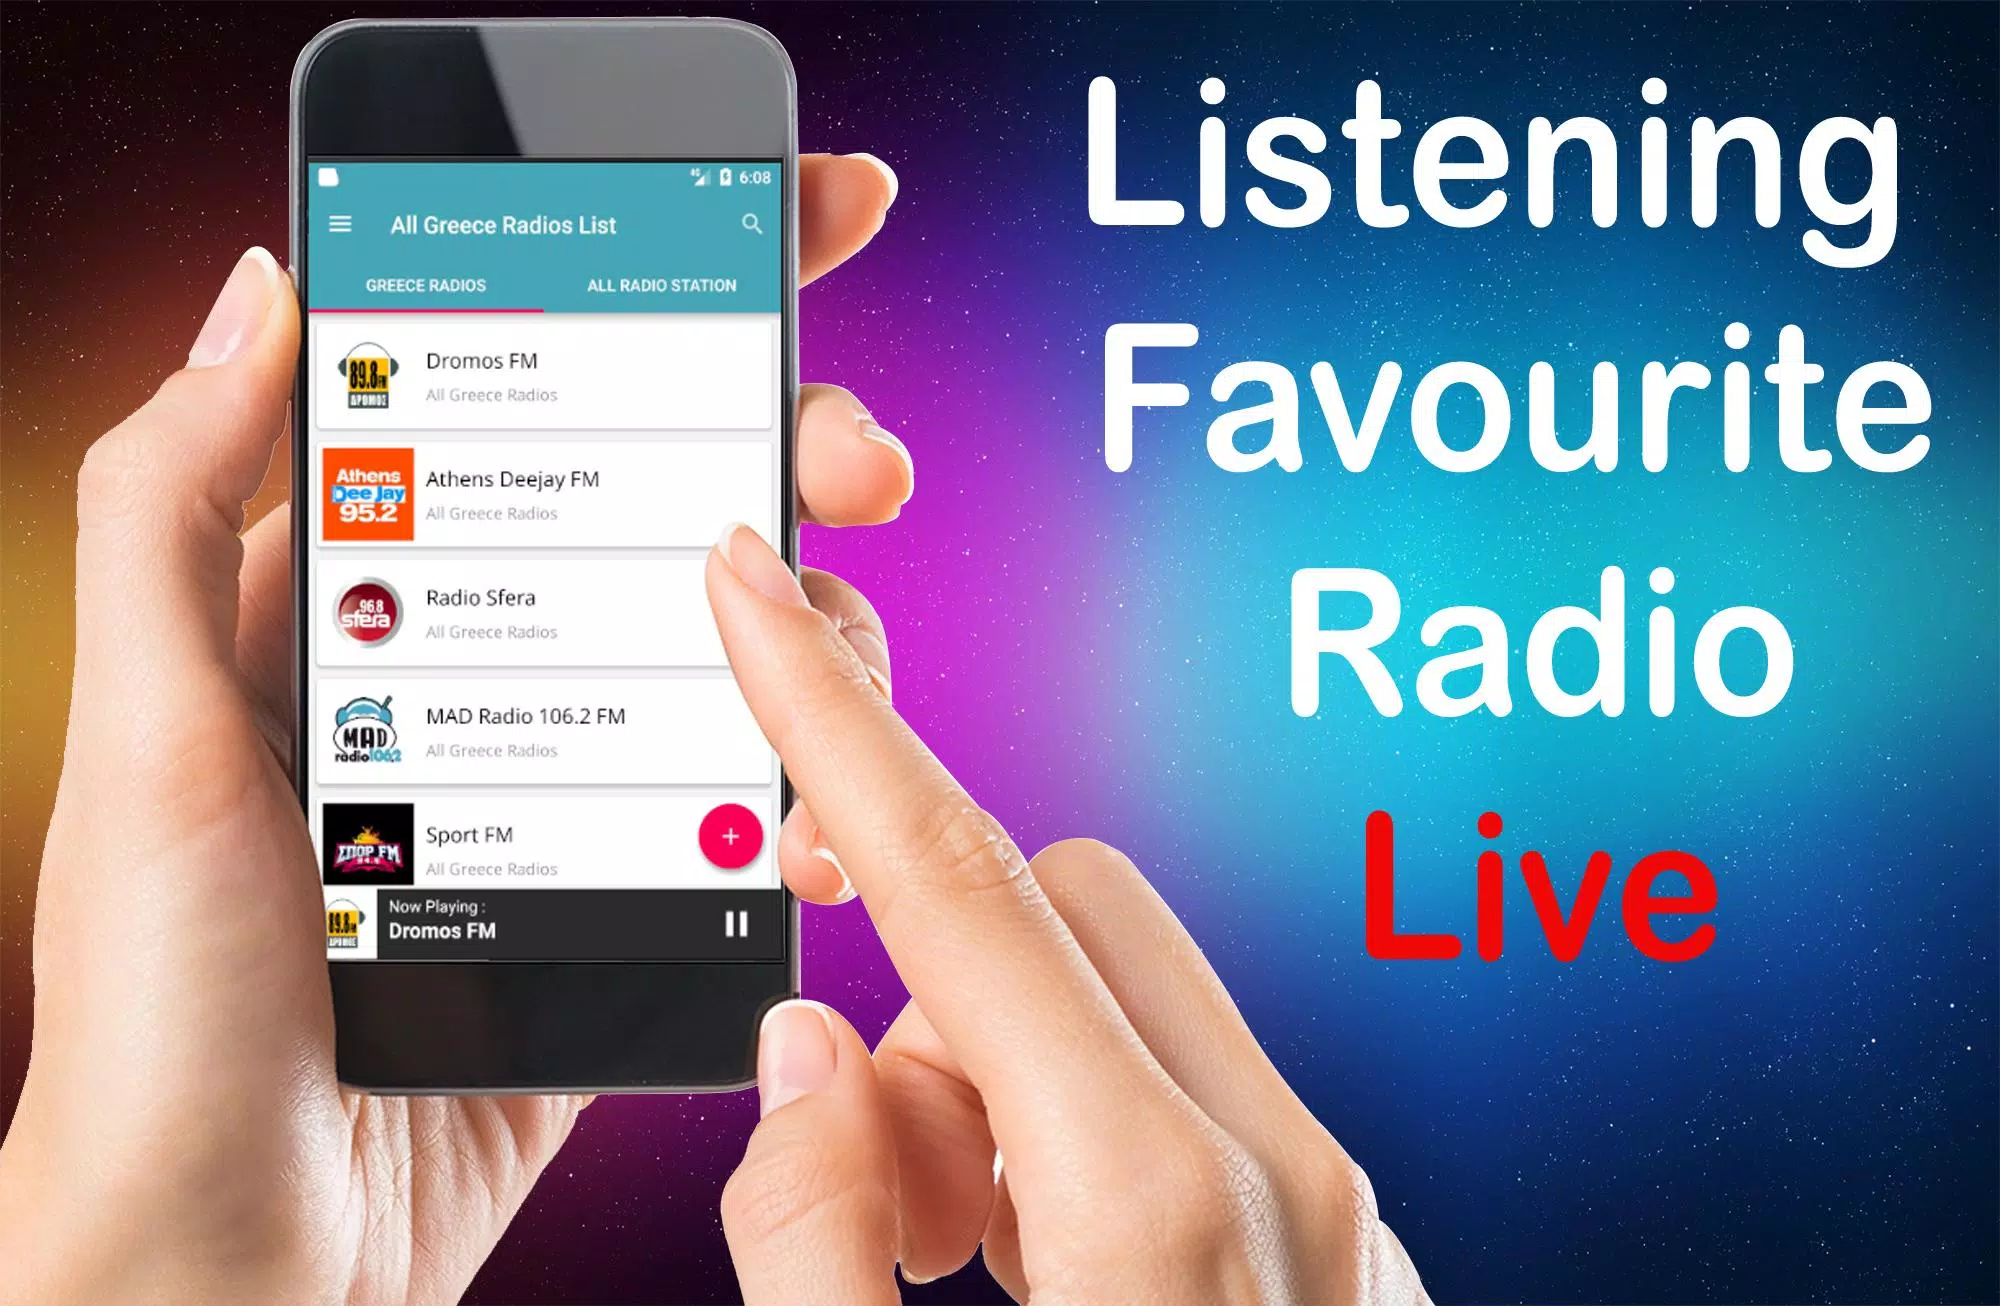 Radio Greece – All Greece Radios - GRC Radios APK for Android Download